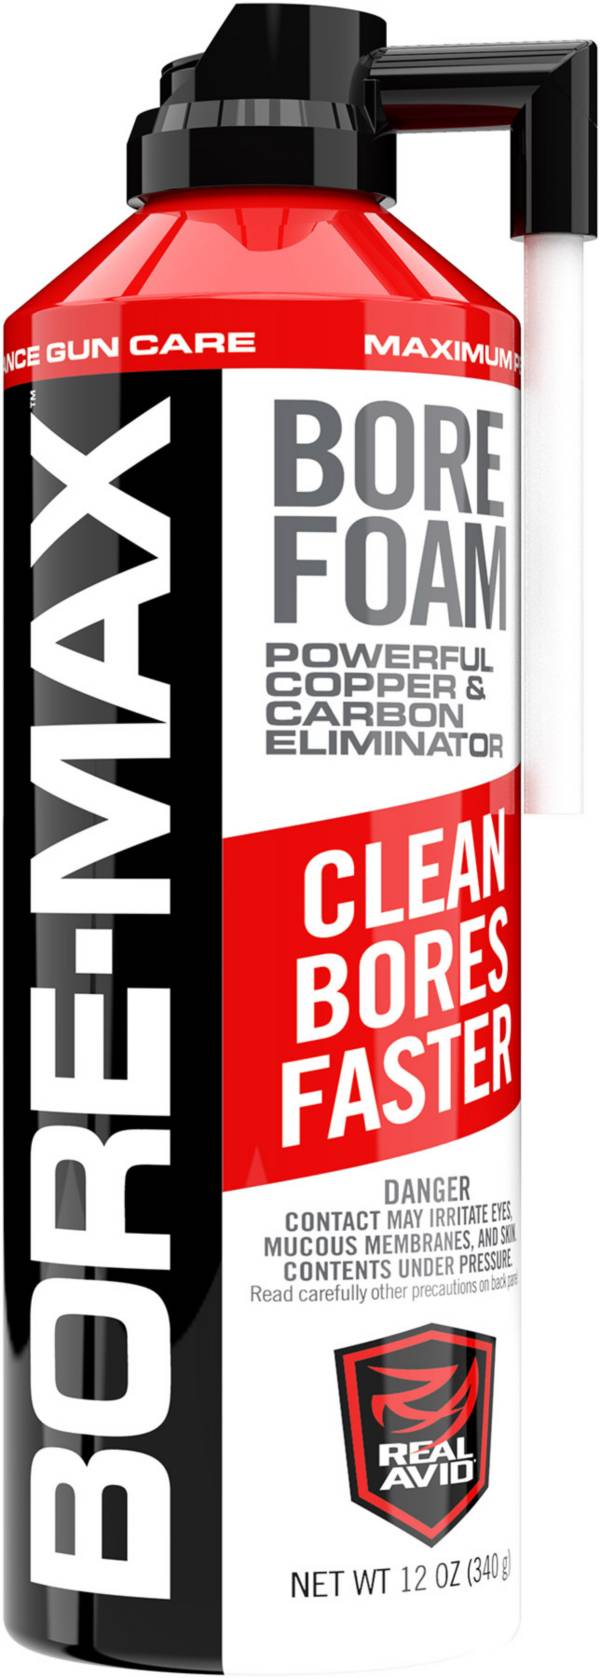 Real Avid Bore-Max Bore Foam product image